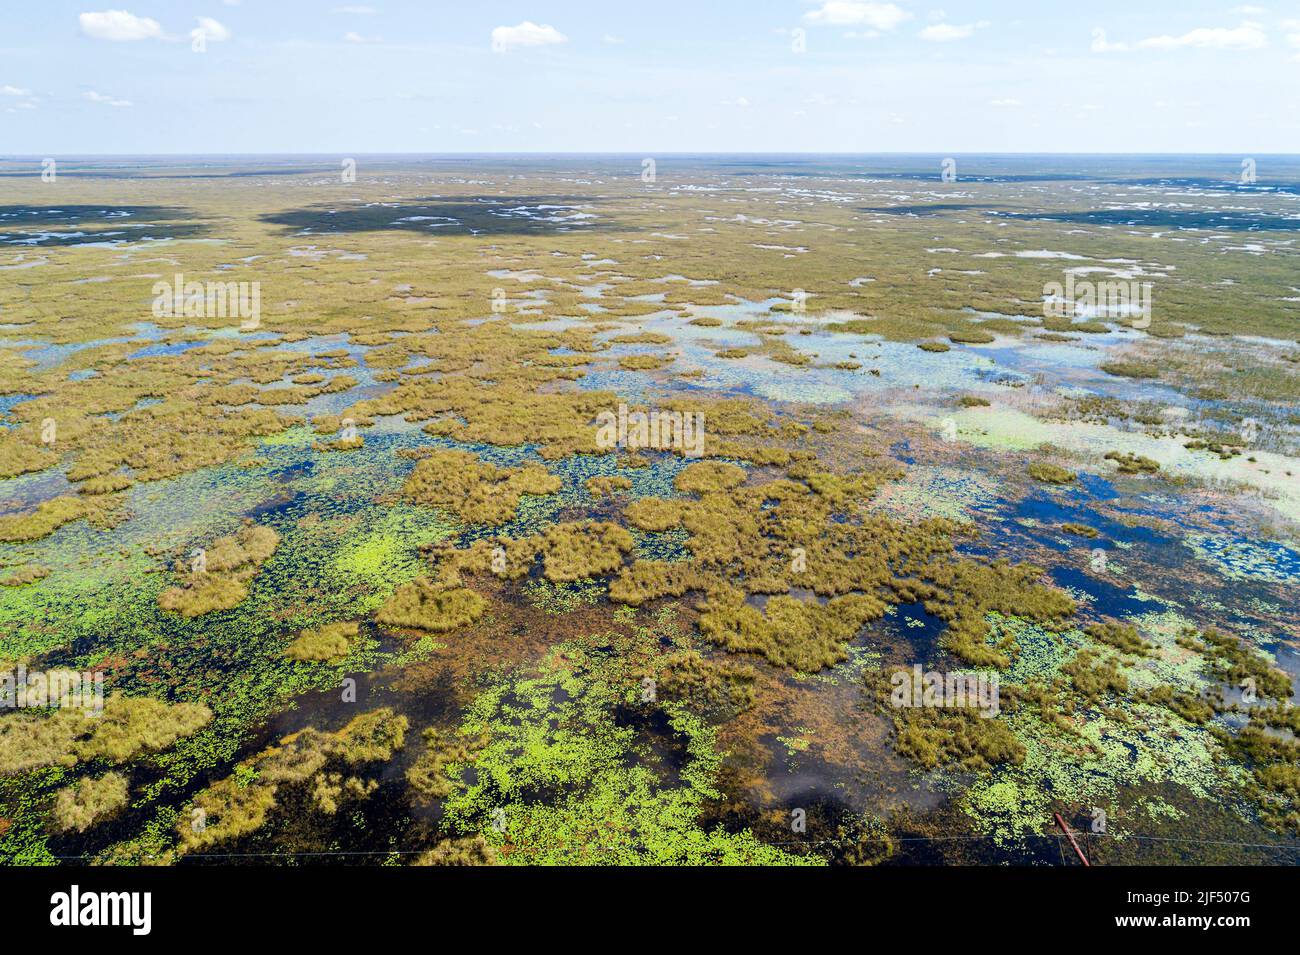 Fort Ft. Lauderdale Weston Florida Everglades,Holey Land Francis S. Taylor Área de Gestión de Vida Silvestre WMA inundado marisma de pasto sawgrass temporada de lluvias, ové aéreo Foto de stock